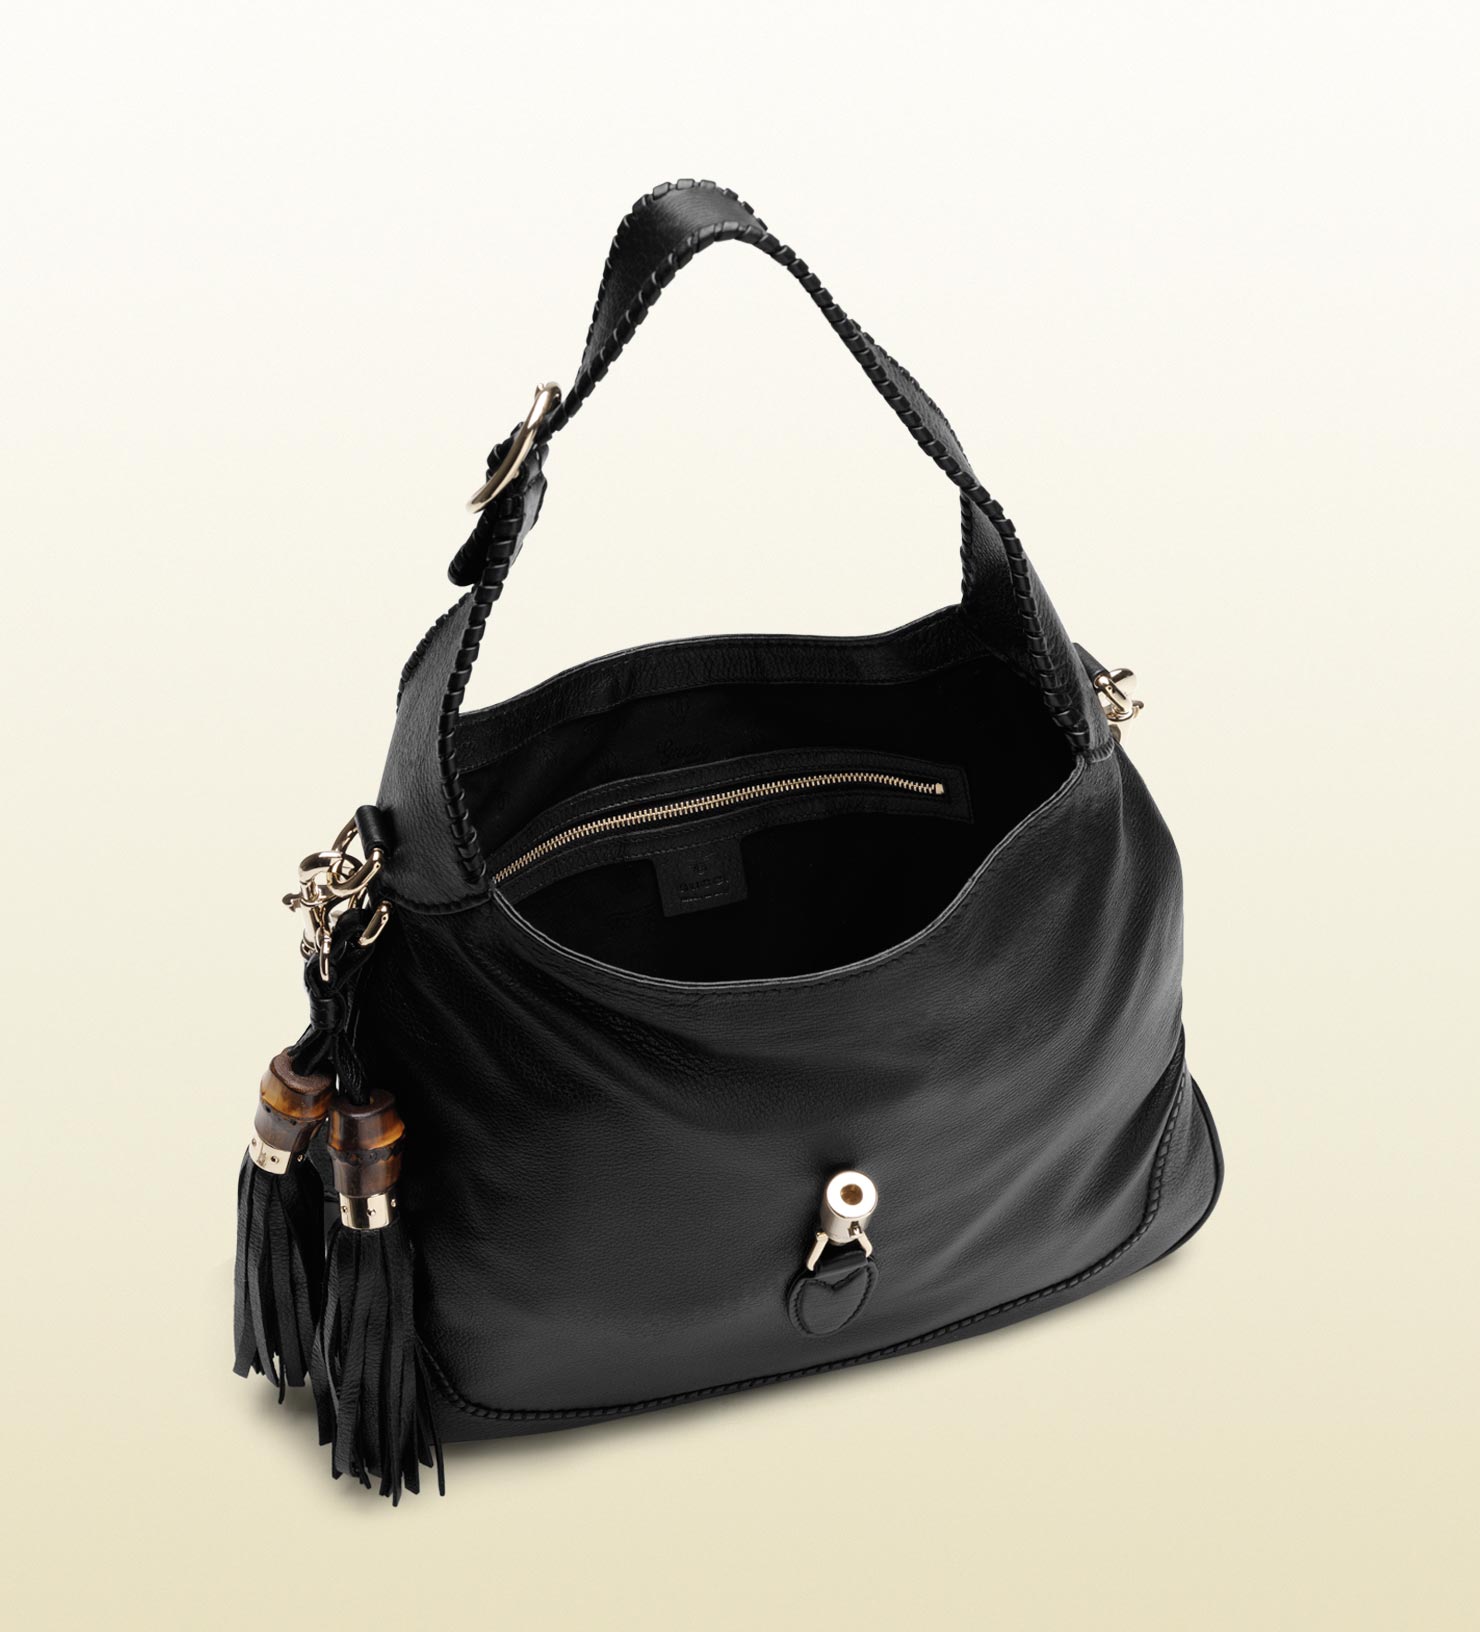 Lyst - Gucci New Jackie Leather Shoulder Bag in Black